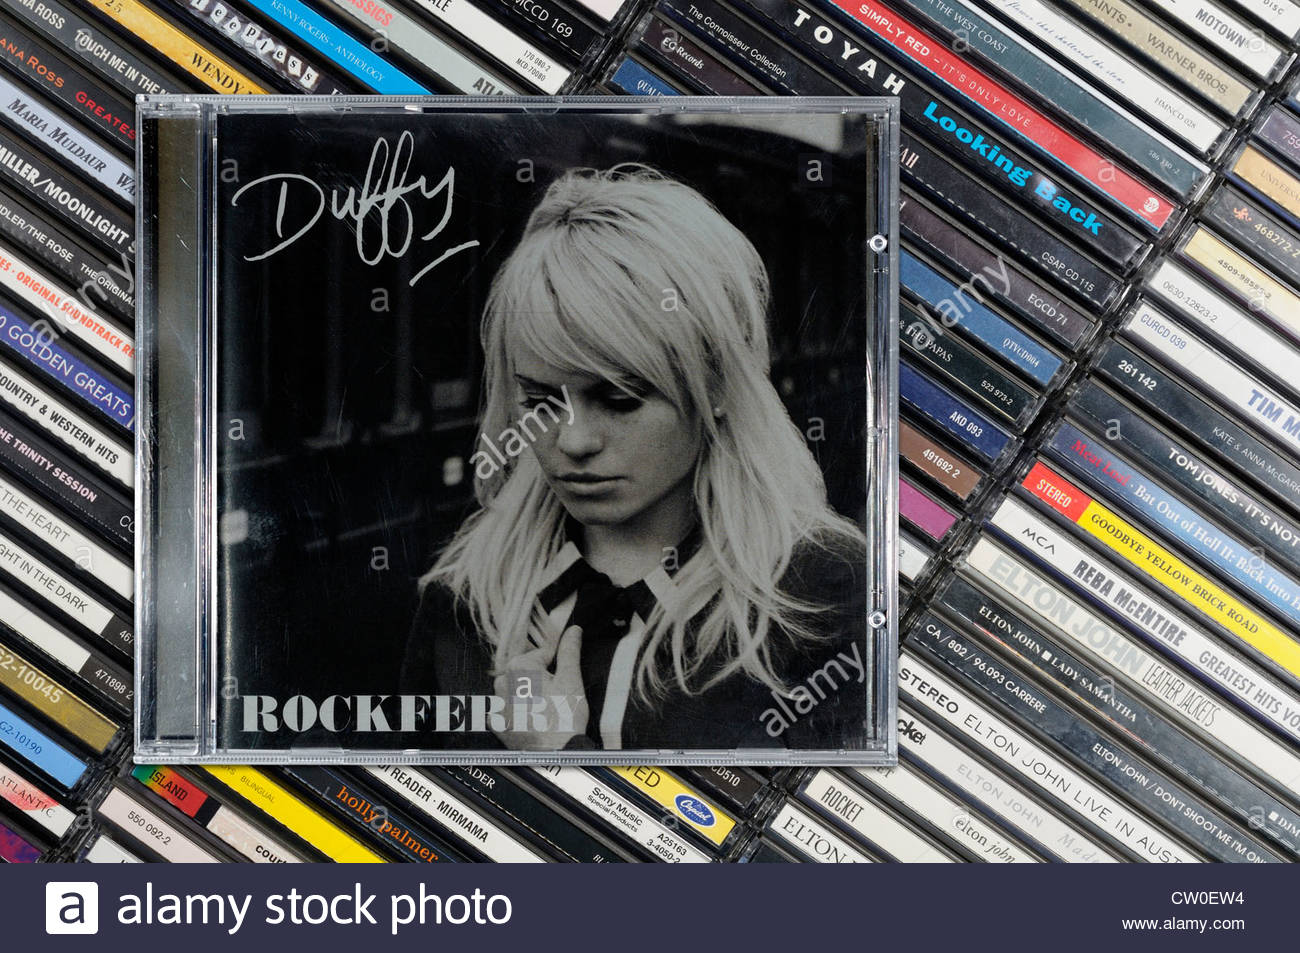 Duffy album Rockferry , CD cases. England Stock Photo - Alamy